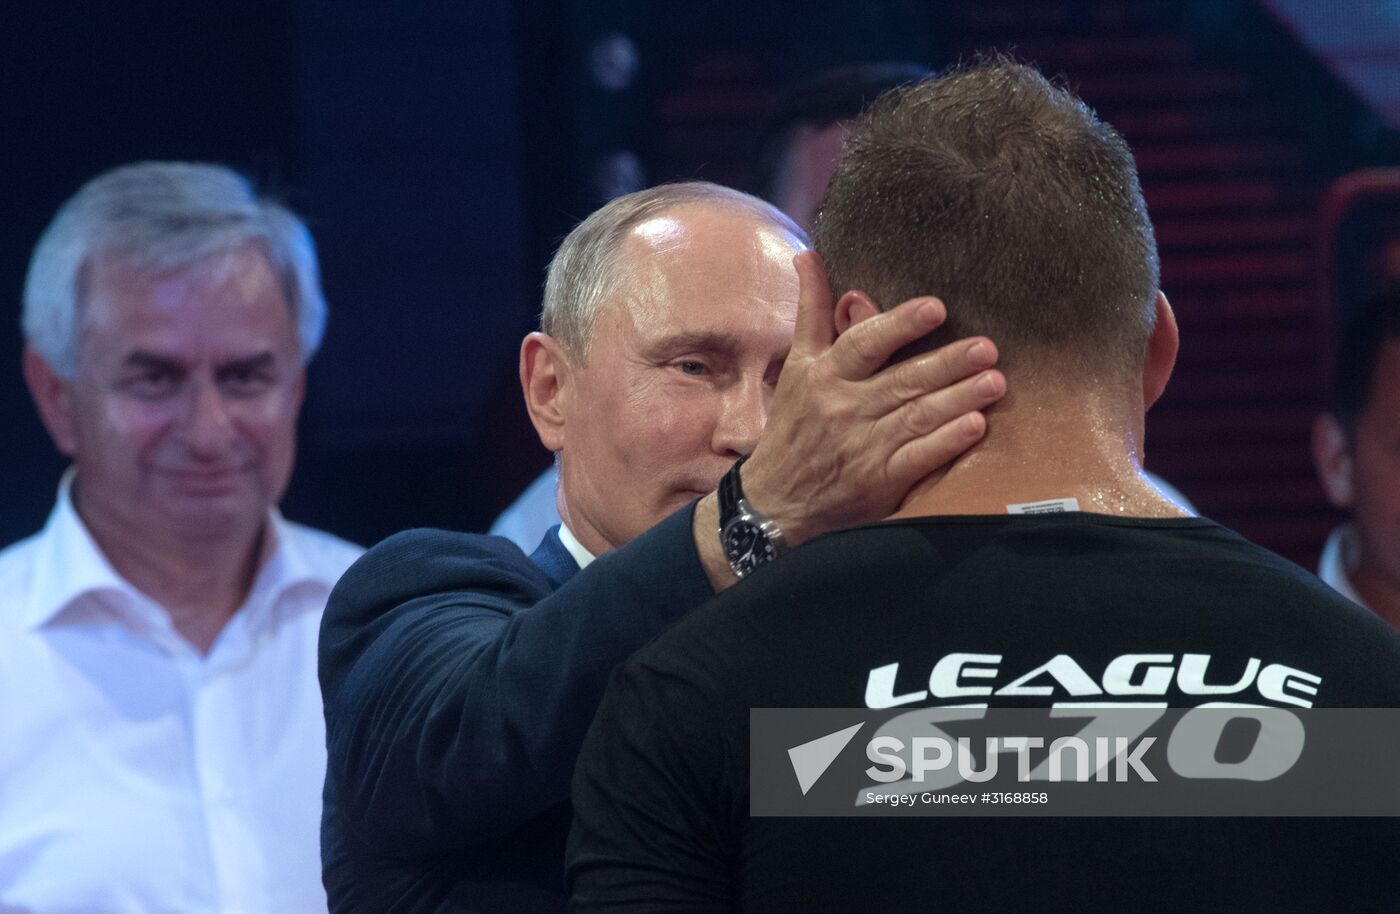 Russian President Vladimir Putin's working trip to Sochi